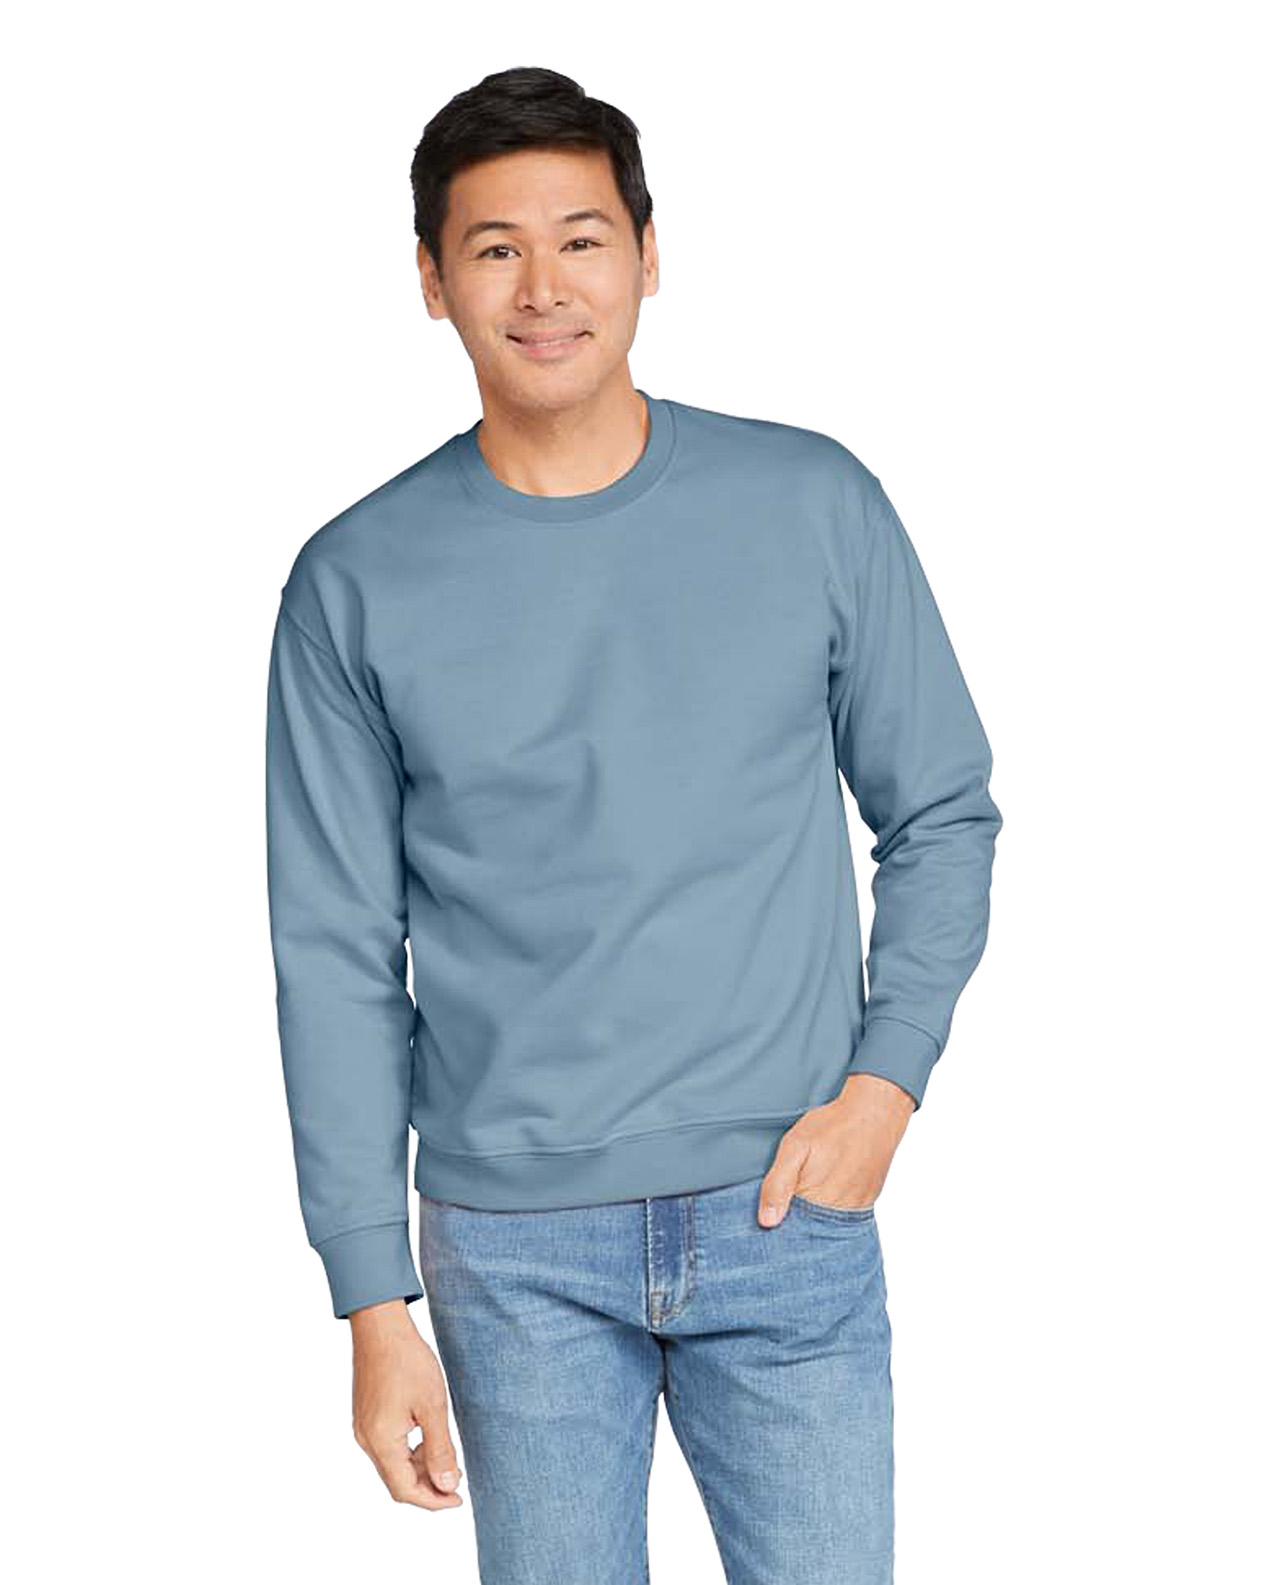 SF000 Adult Crewneck Sweatshirt